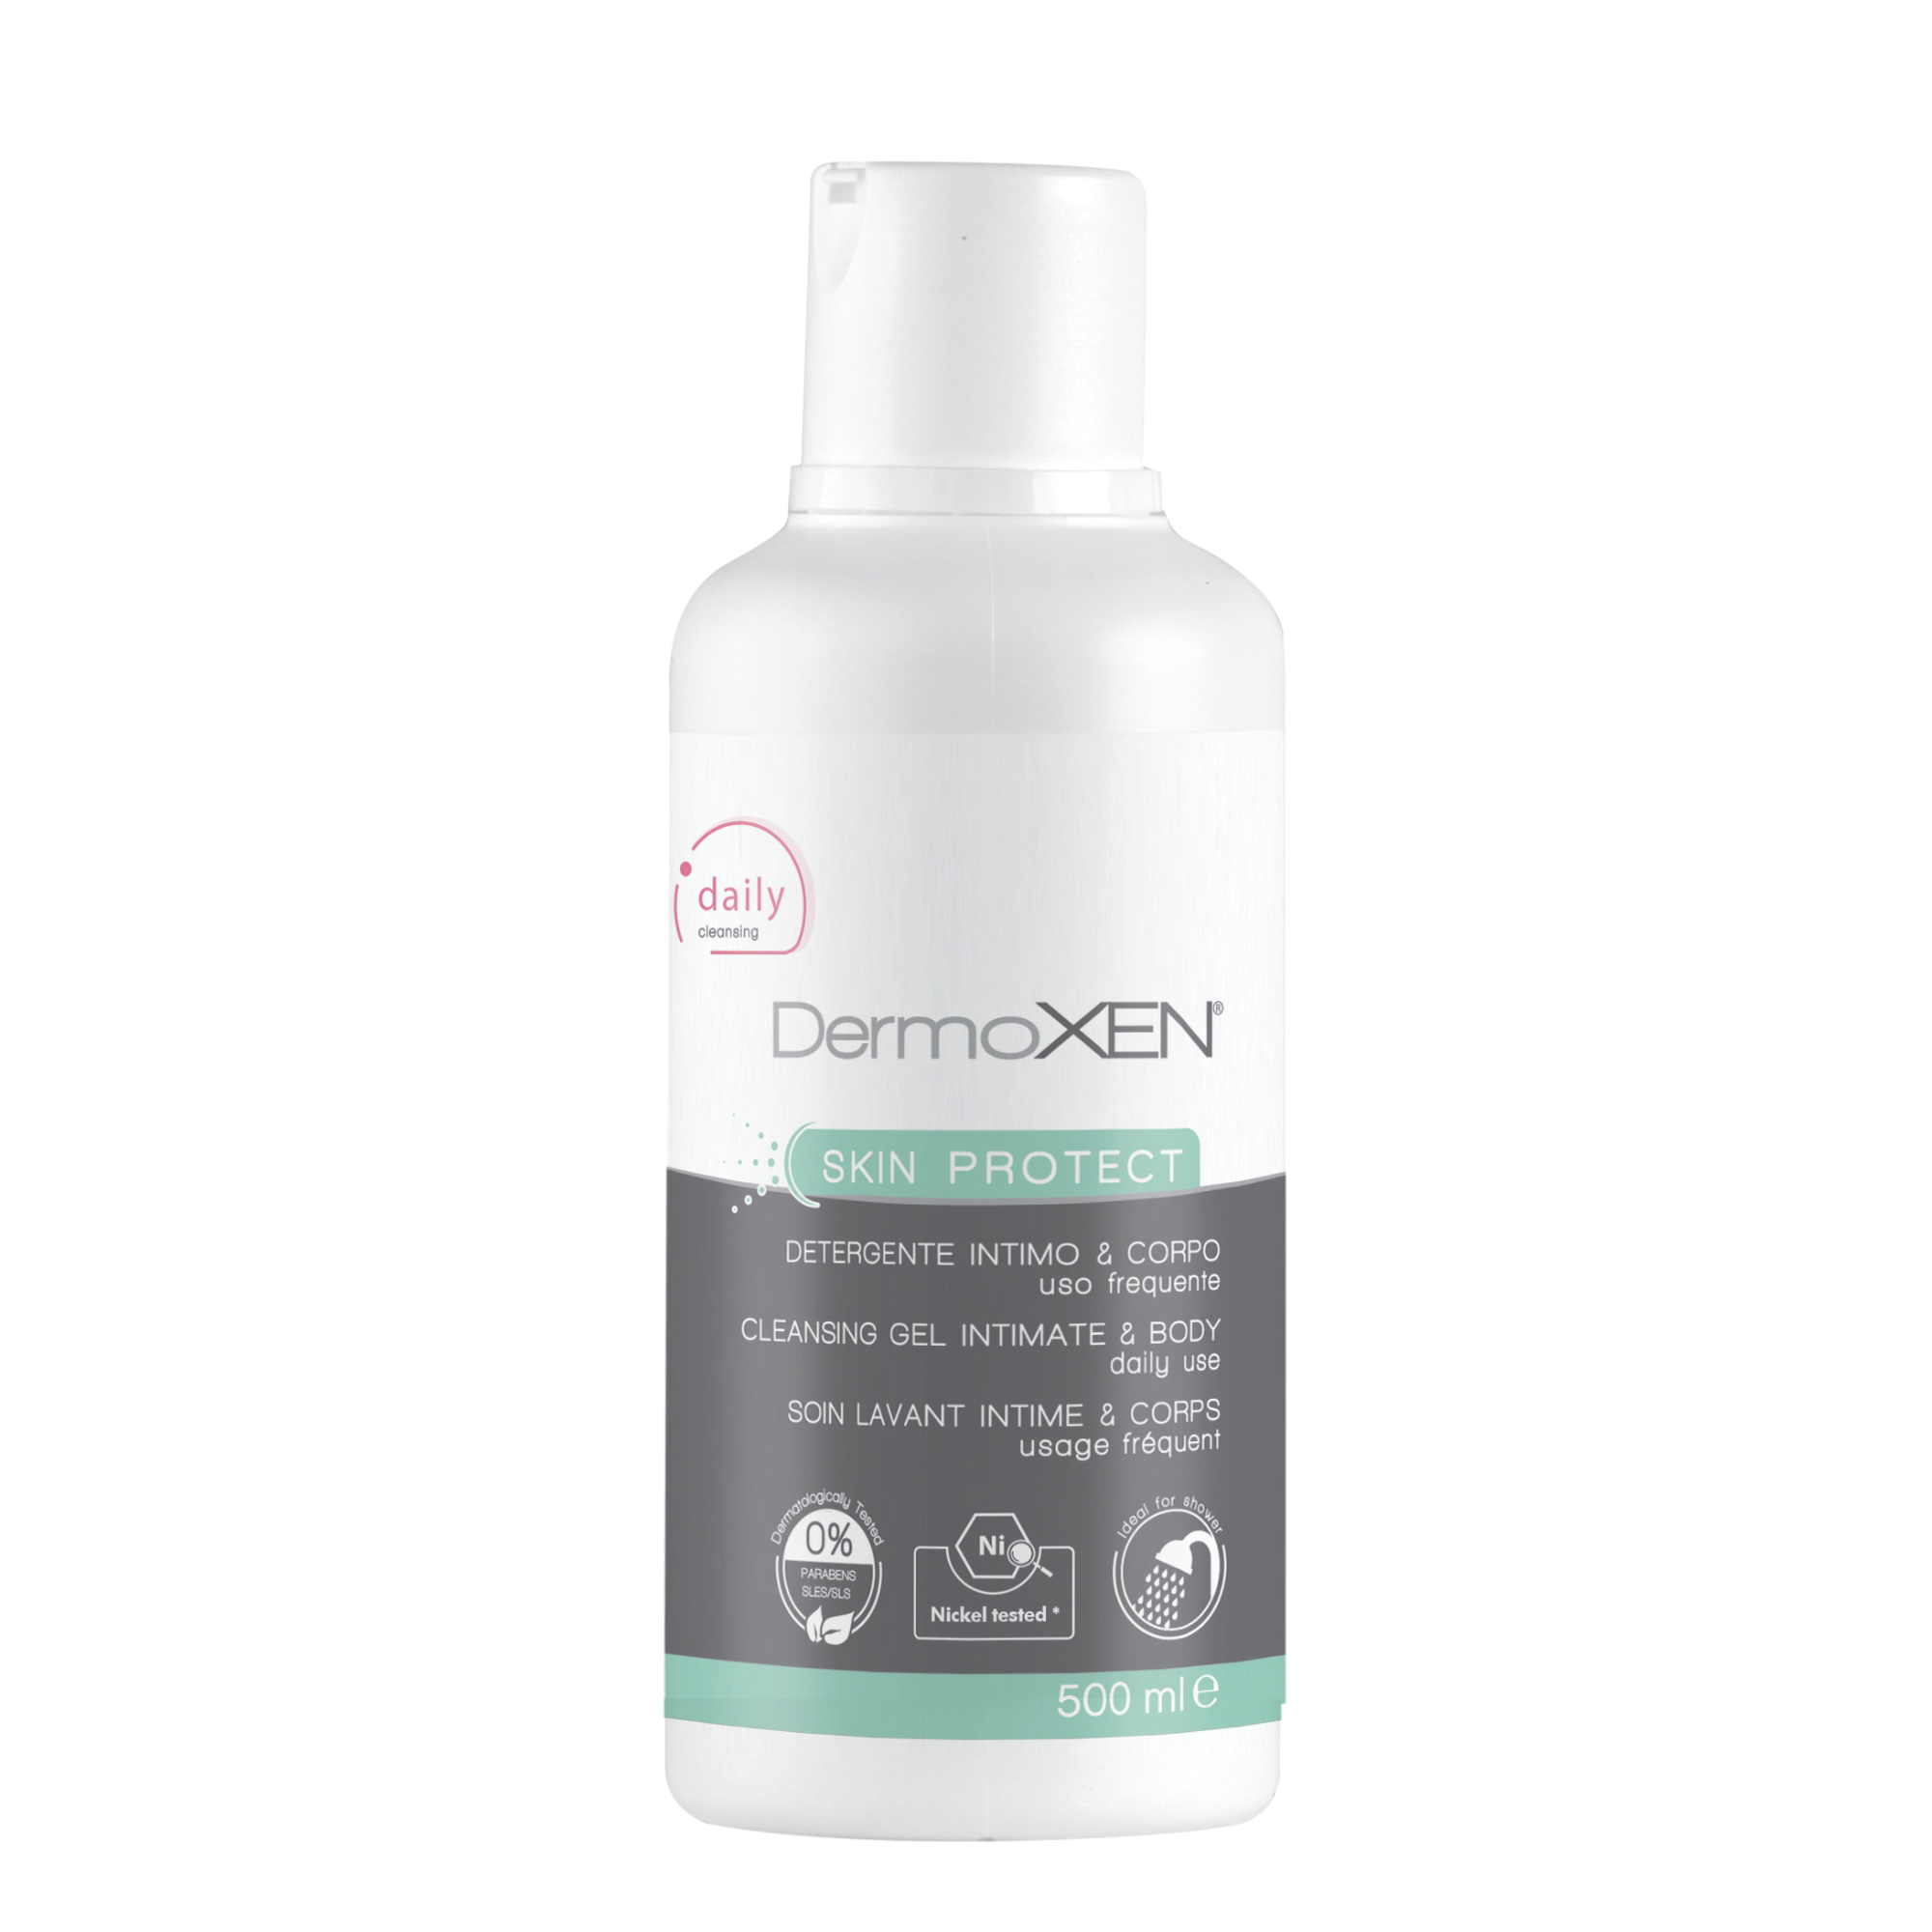 Dermoxen SKIN PROTECT body cleanser